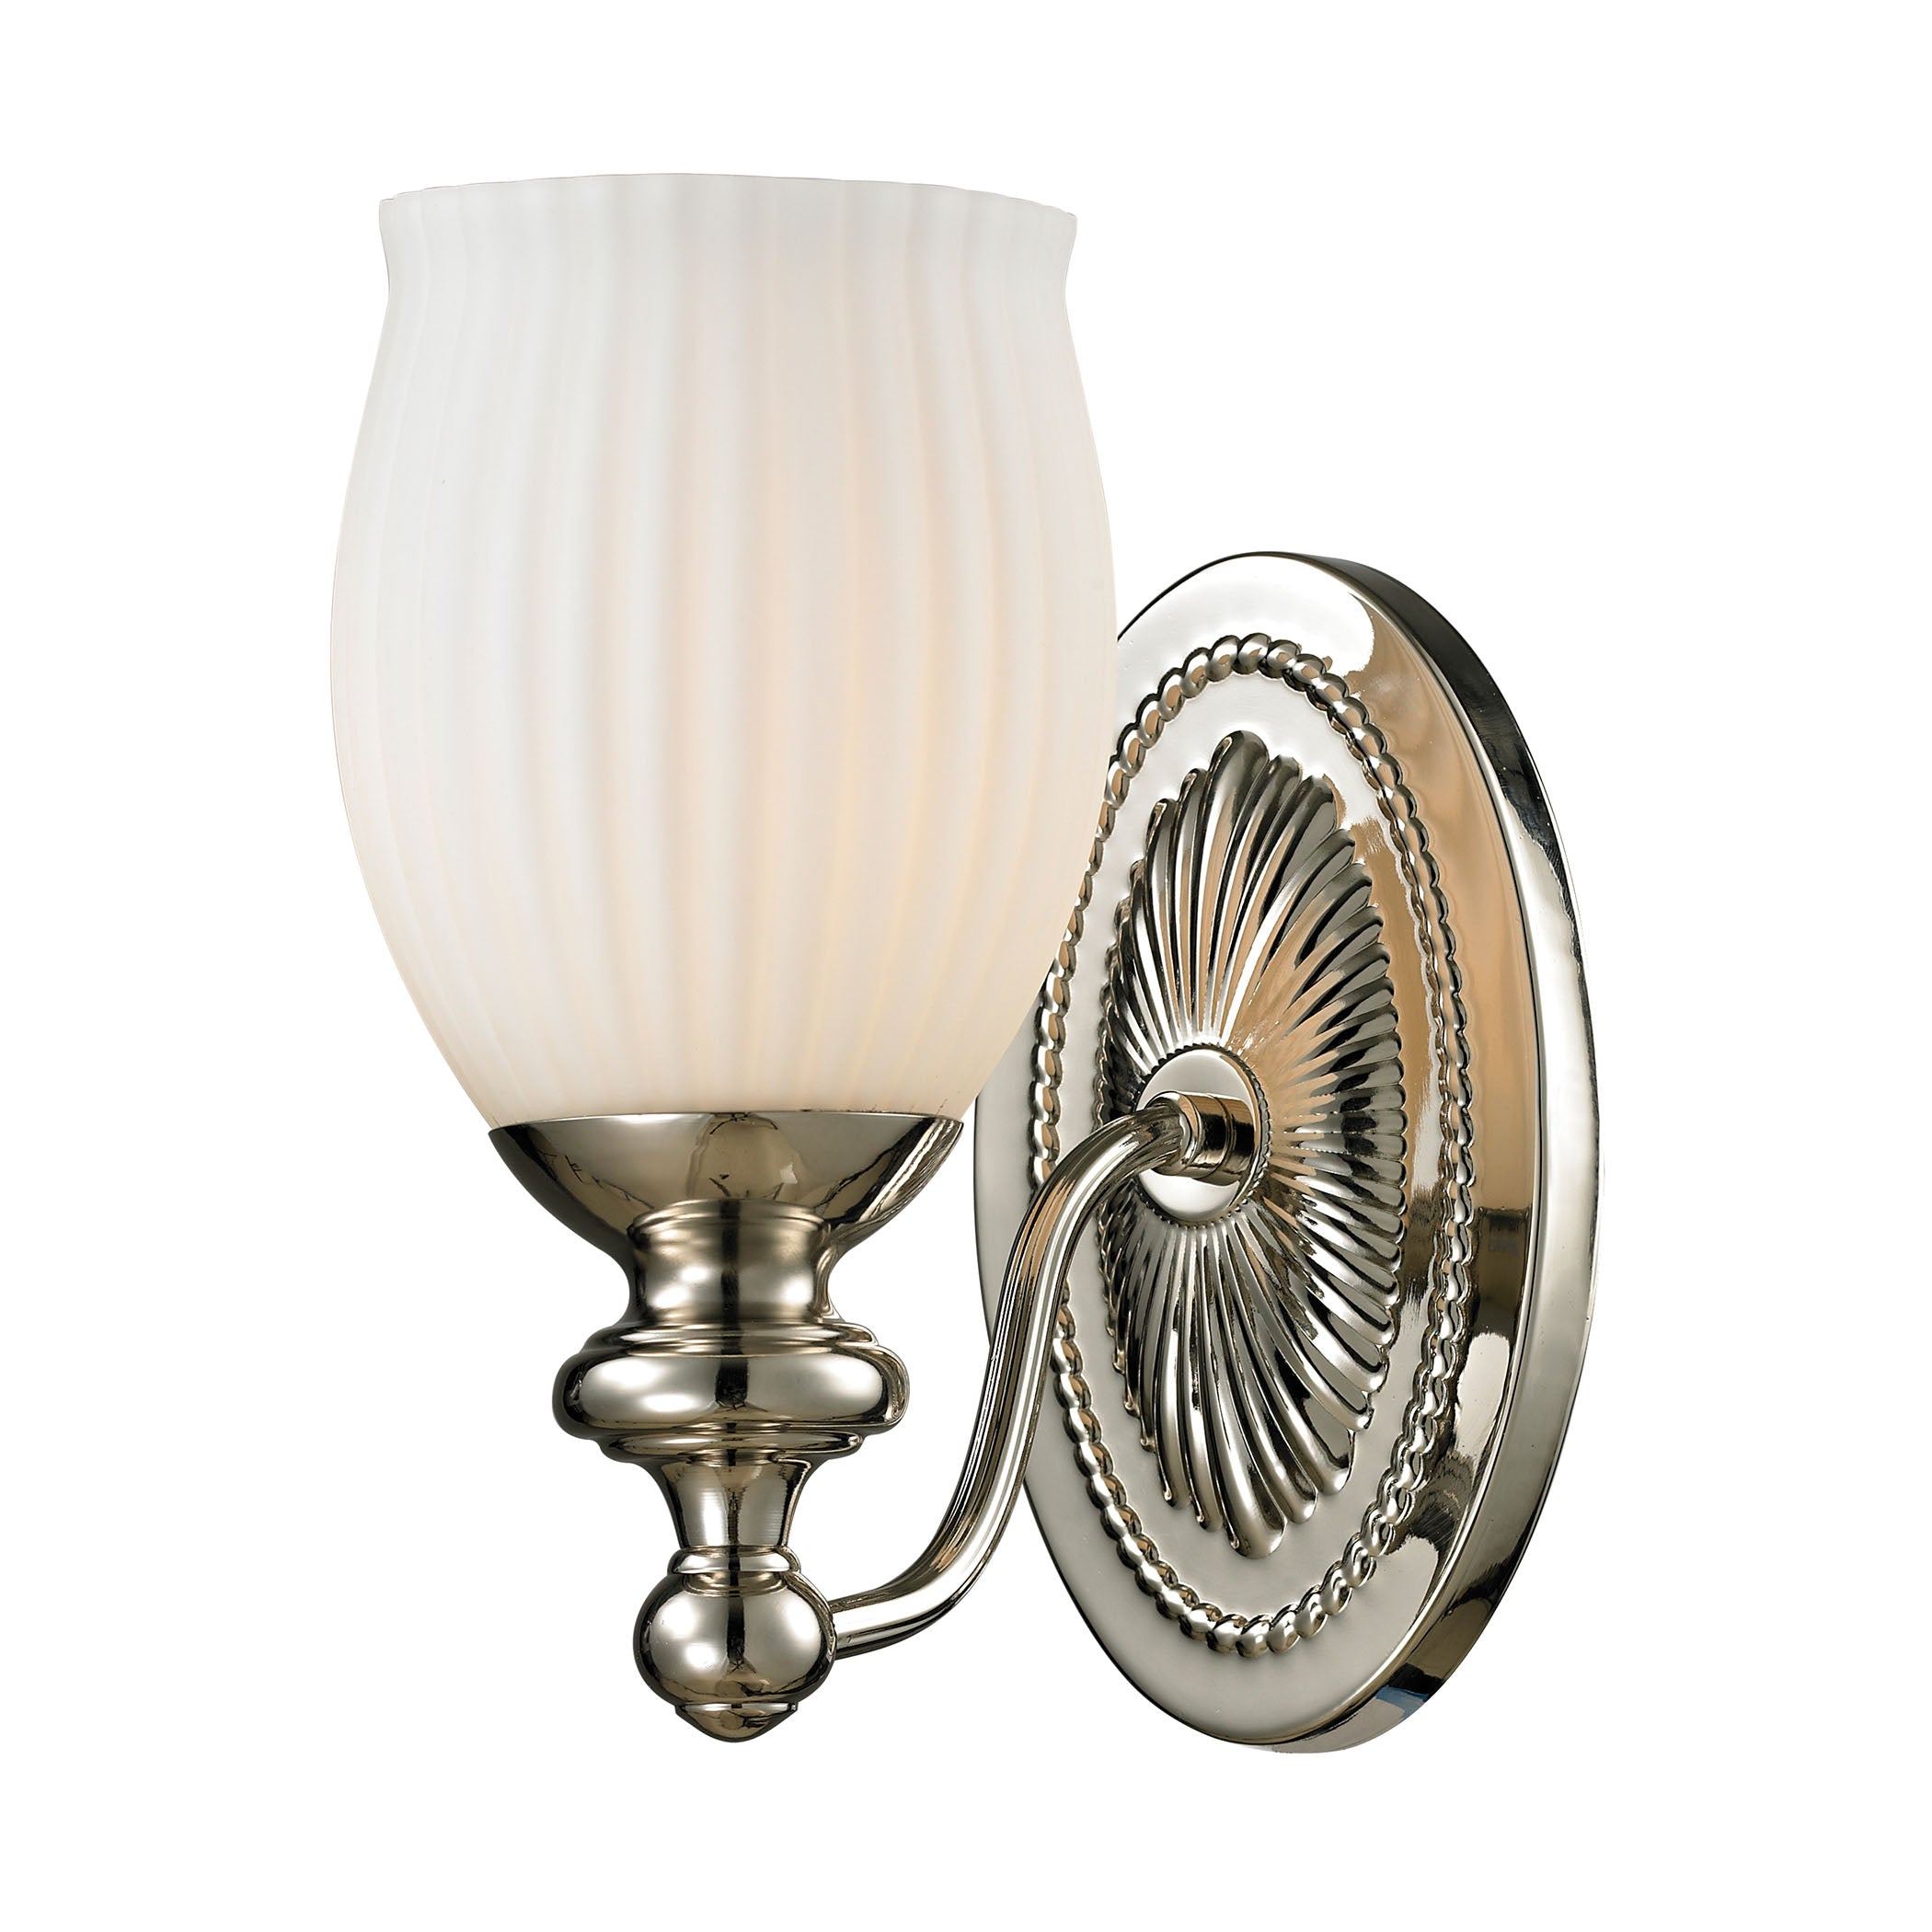 ELK Lighting 11640/1 Park Ridge 1-Light Vanity Lamp in Polished Nickel with Reeded Opal Glass